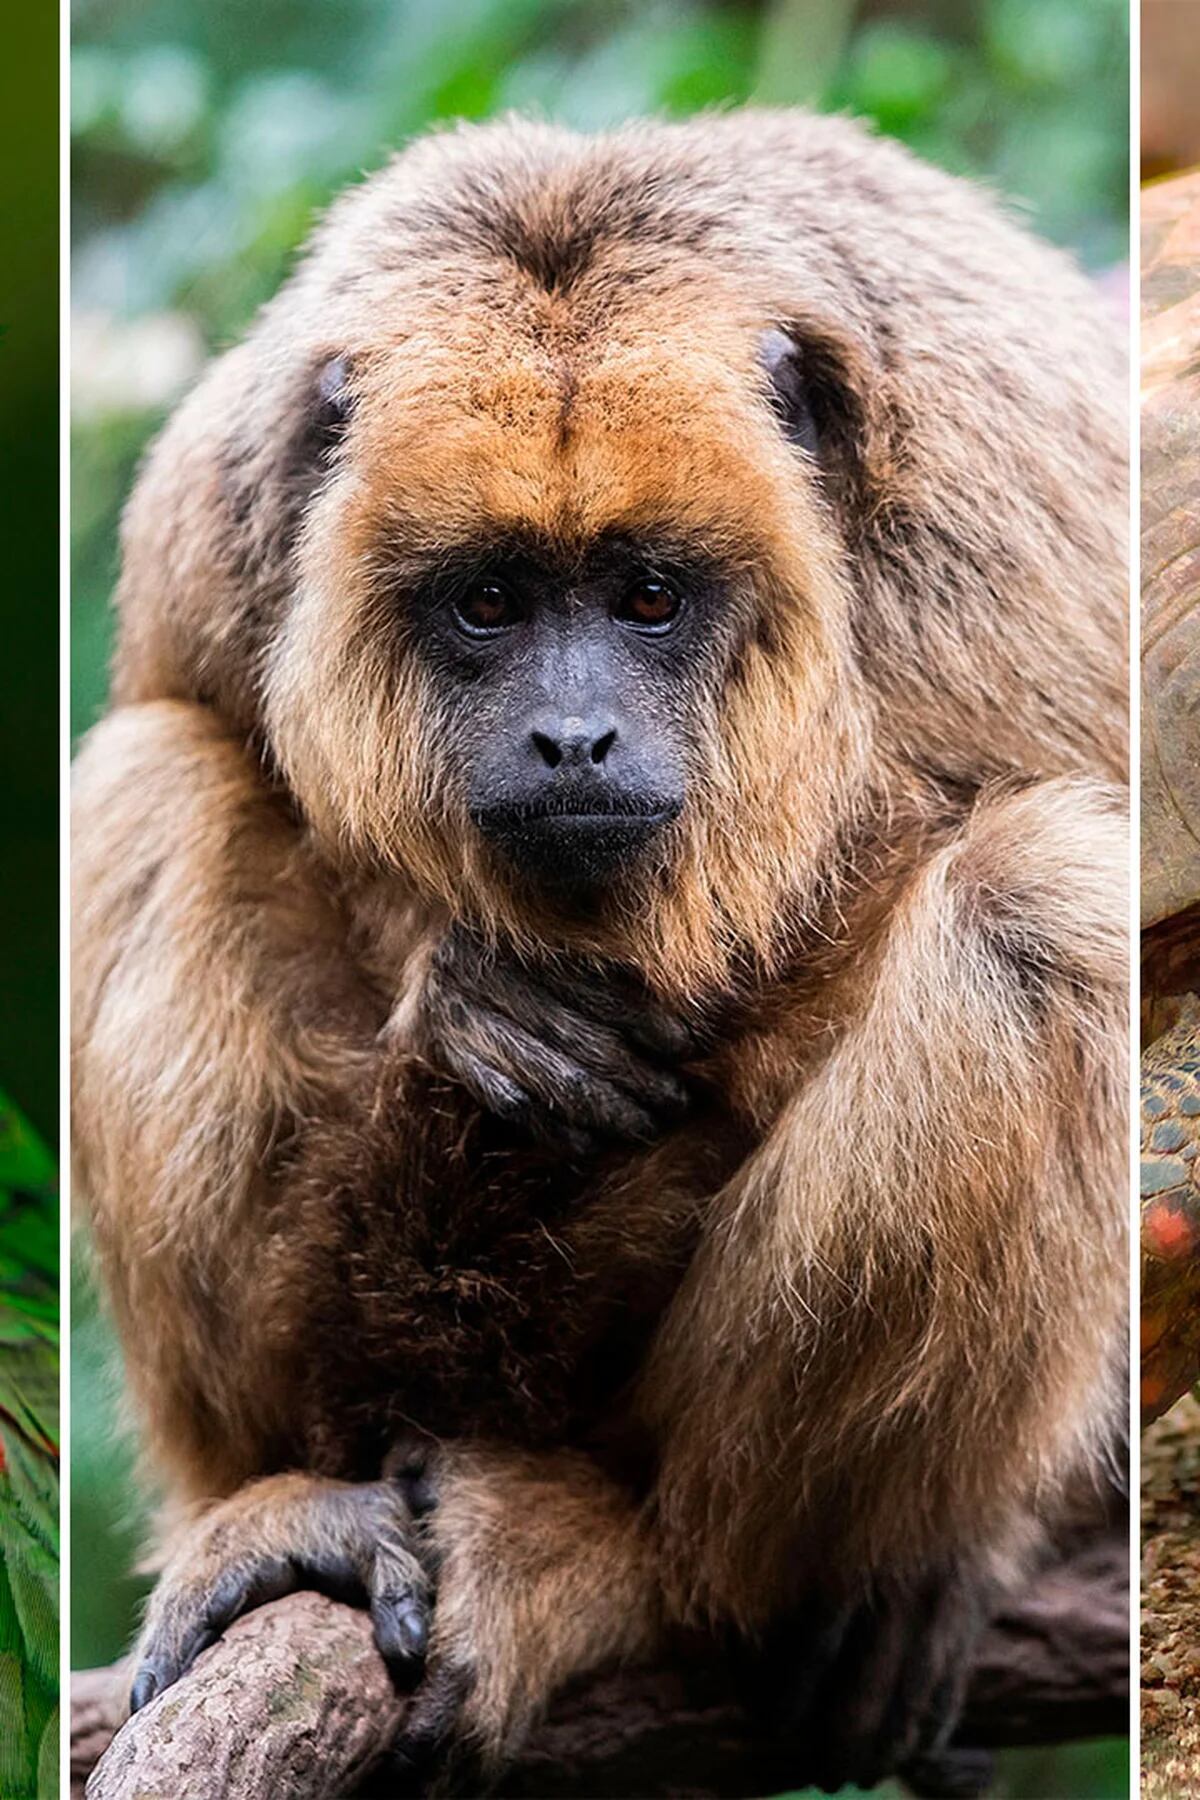 Roban monos en peligro de extinción de un zoológico en Francia